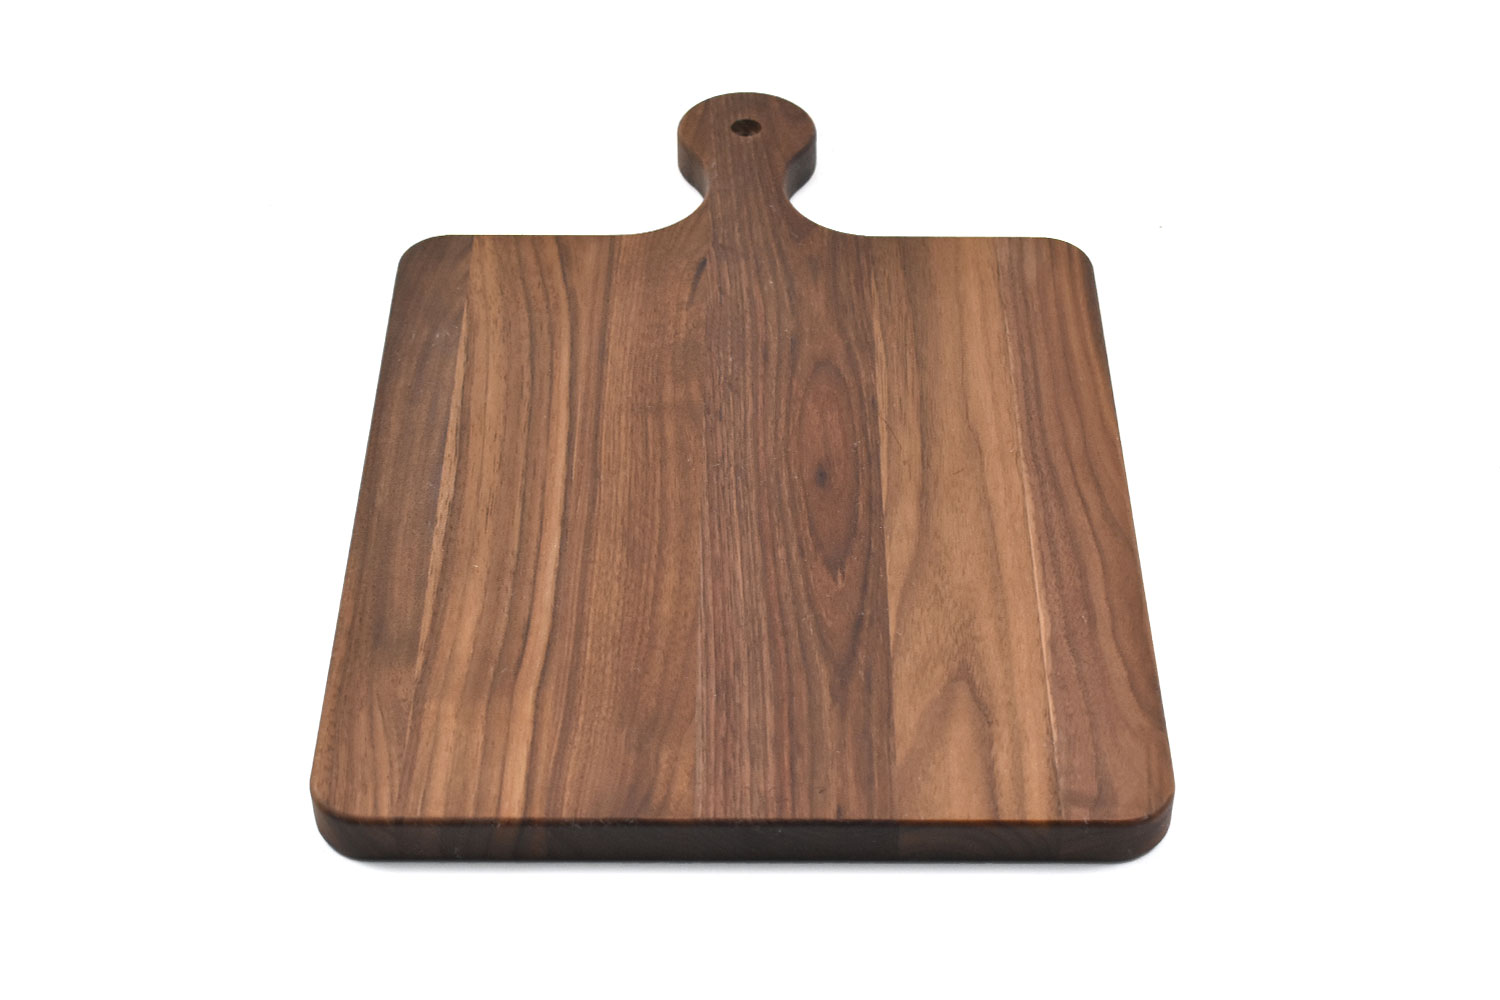 Walnut Wood Cutting Board with Rounded Handle, Custom Engraved, Chopping Board, Presentation Board, Made in Canada